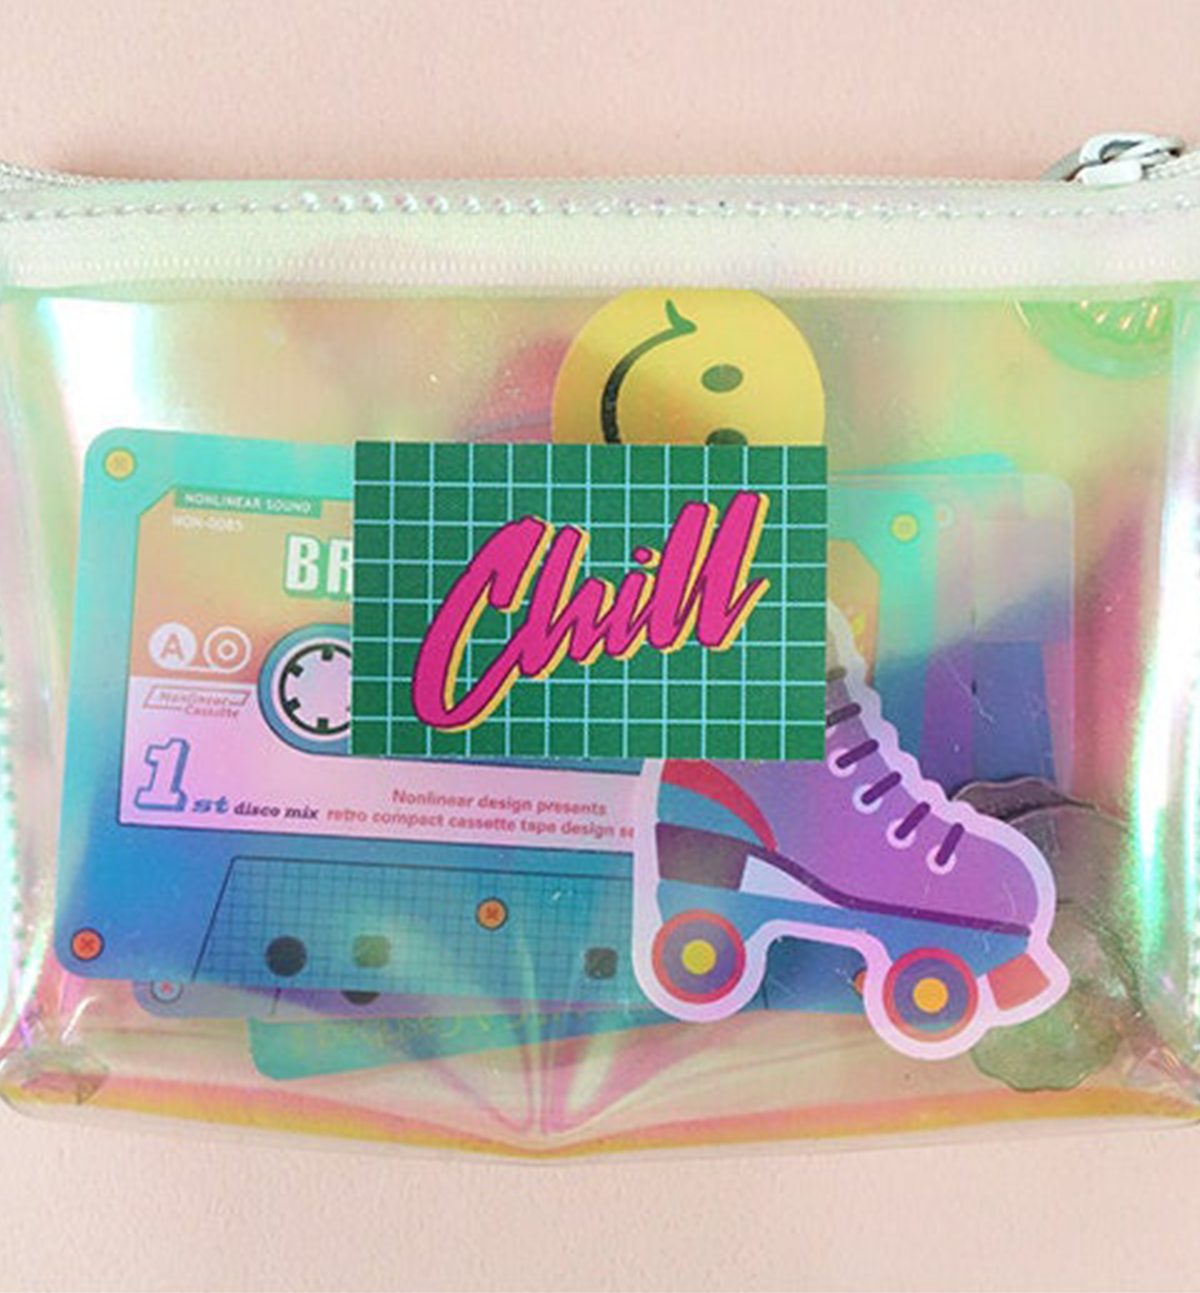 Cassette Sticker Pack [Violet Disco]